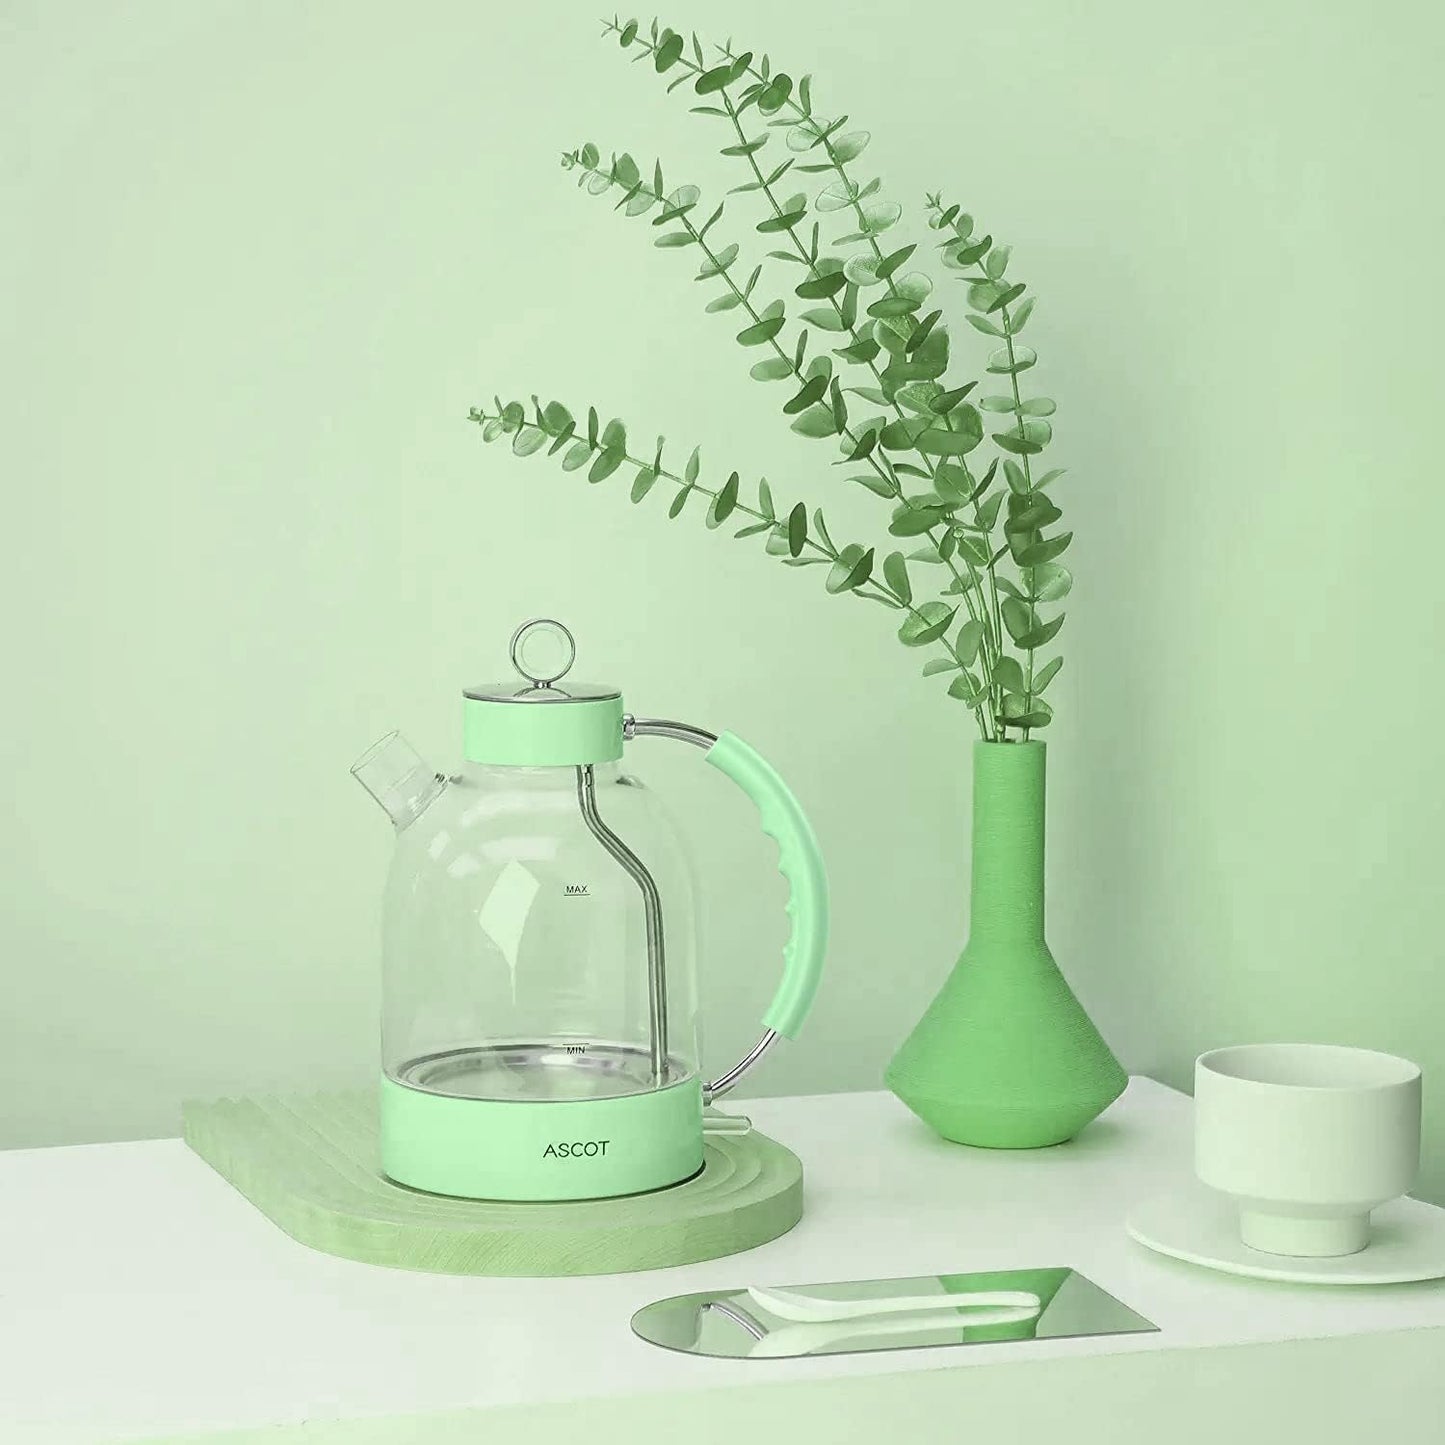 ASCOT Electric Kettle Glass Tea Kettle,1.6L(K2-Green)